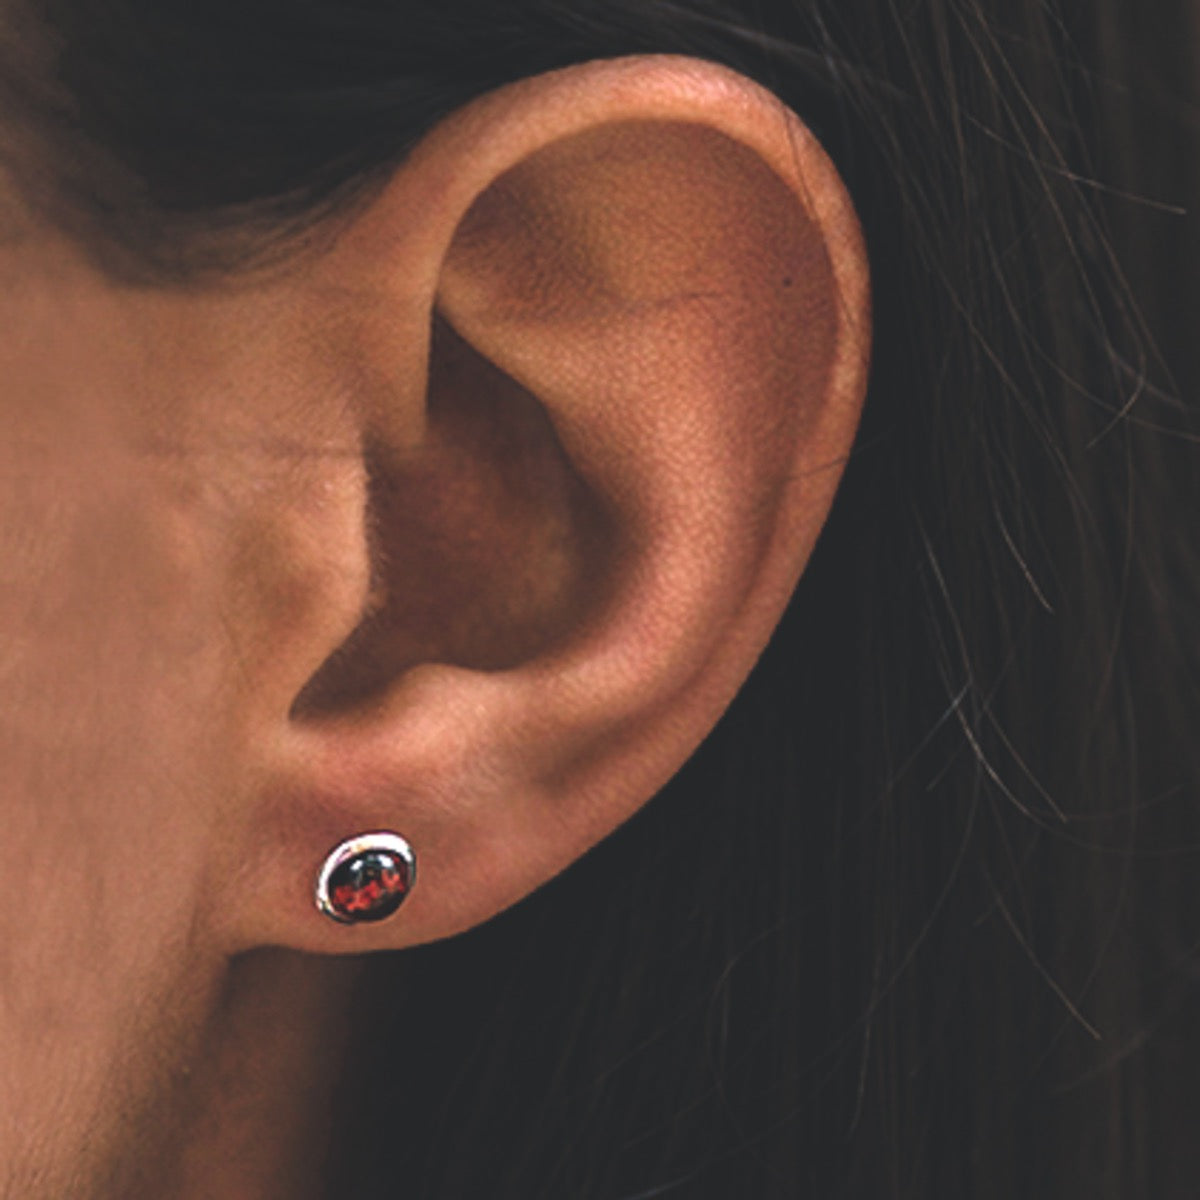 Silver and Garnet birthstone earrings